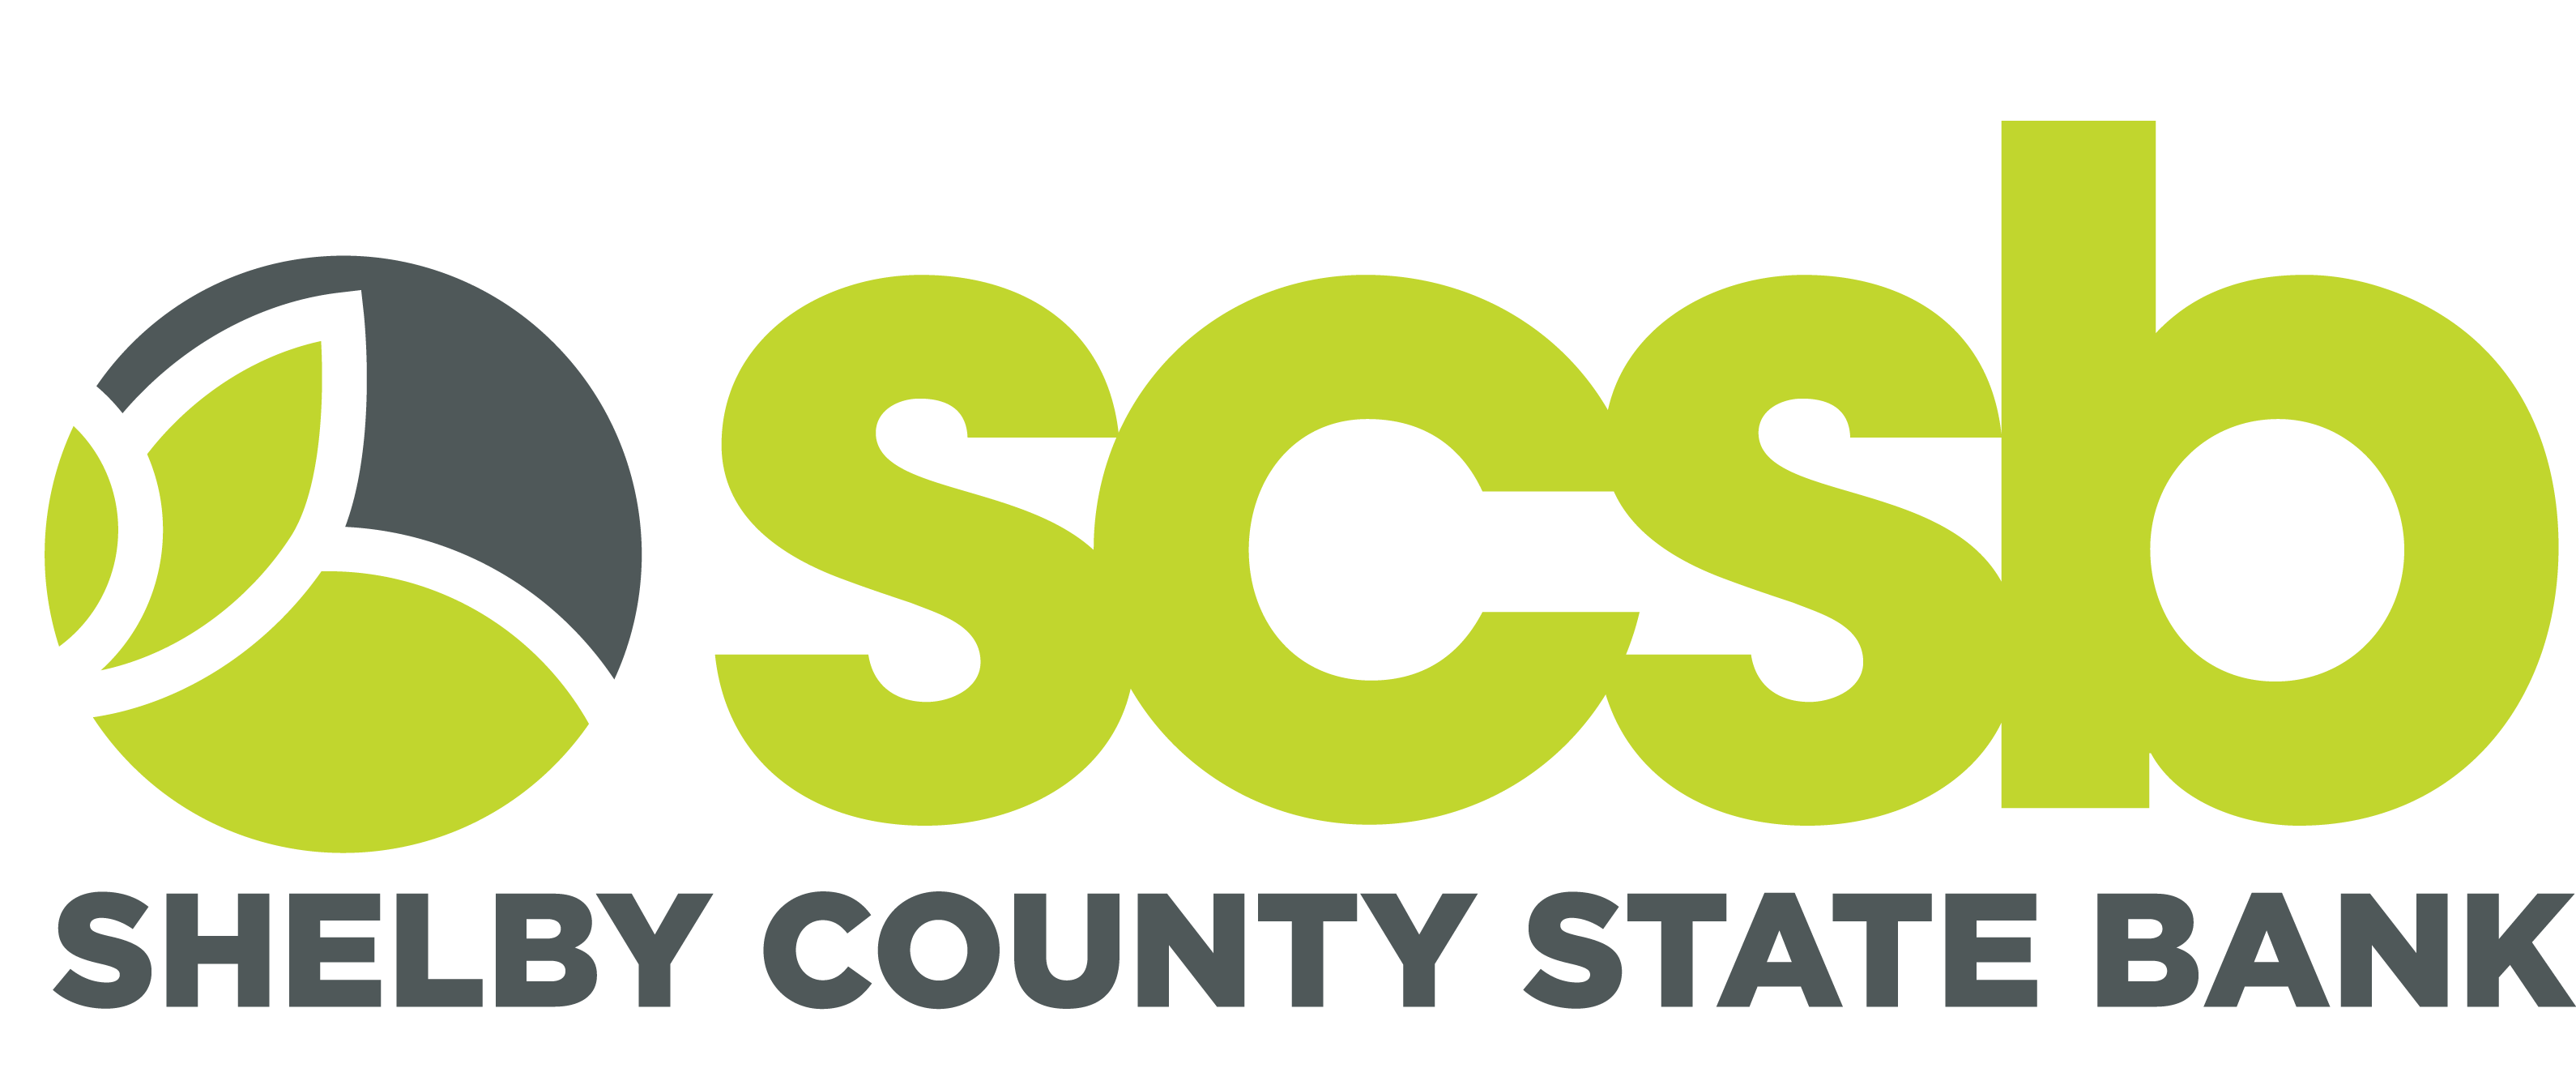 Shelby County State Bank Company Logo